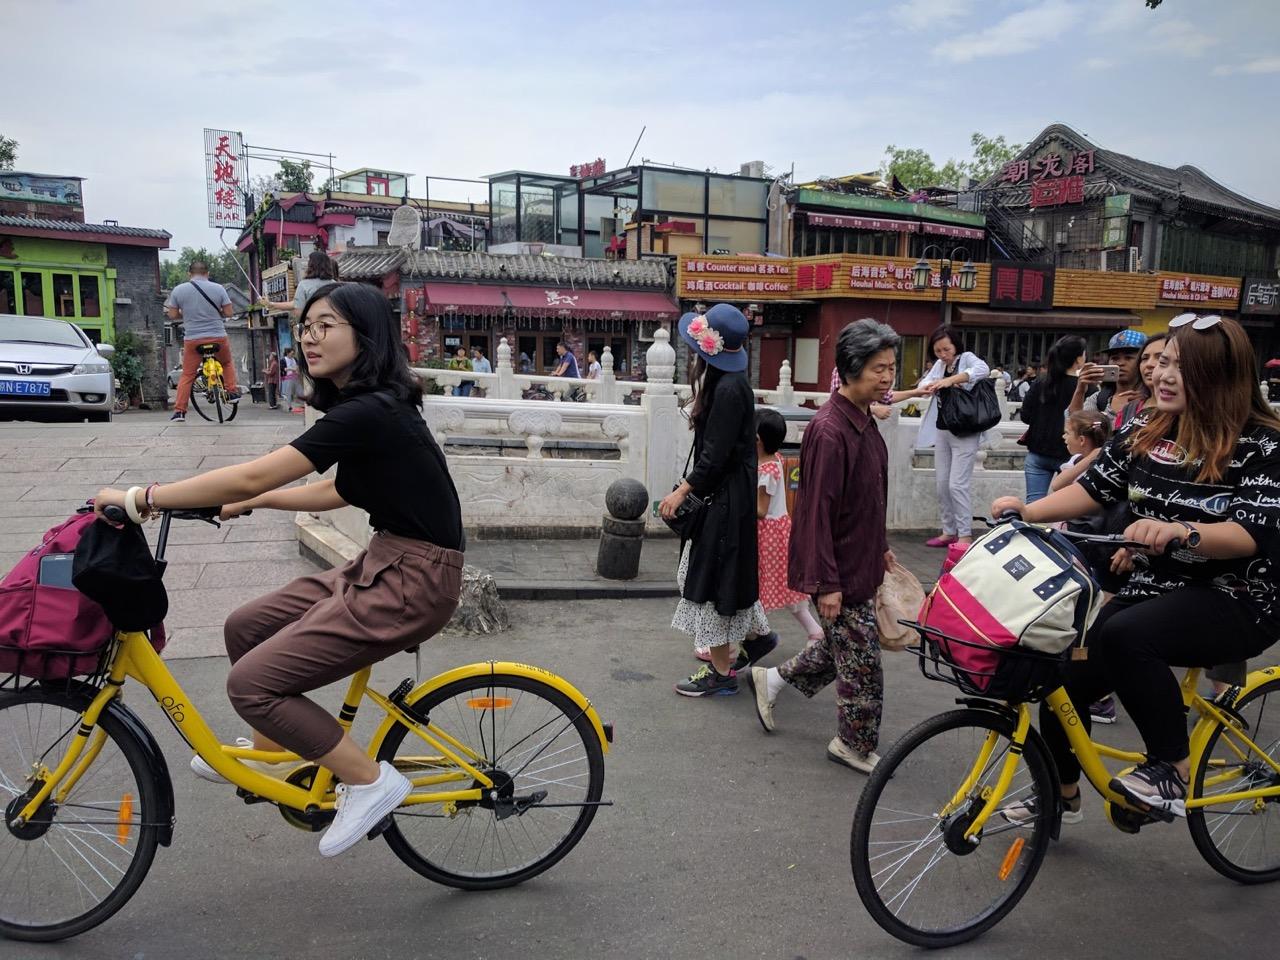 Riding bicycles in Beijing's Houhai neighborhood